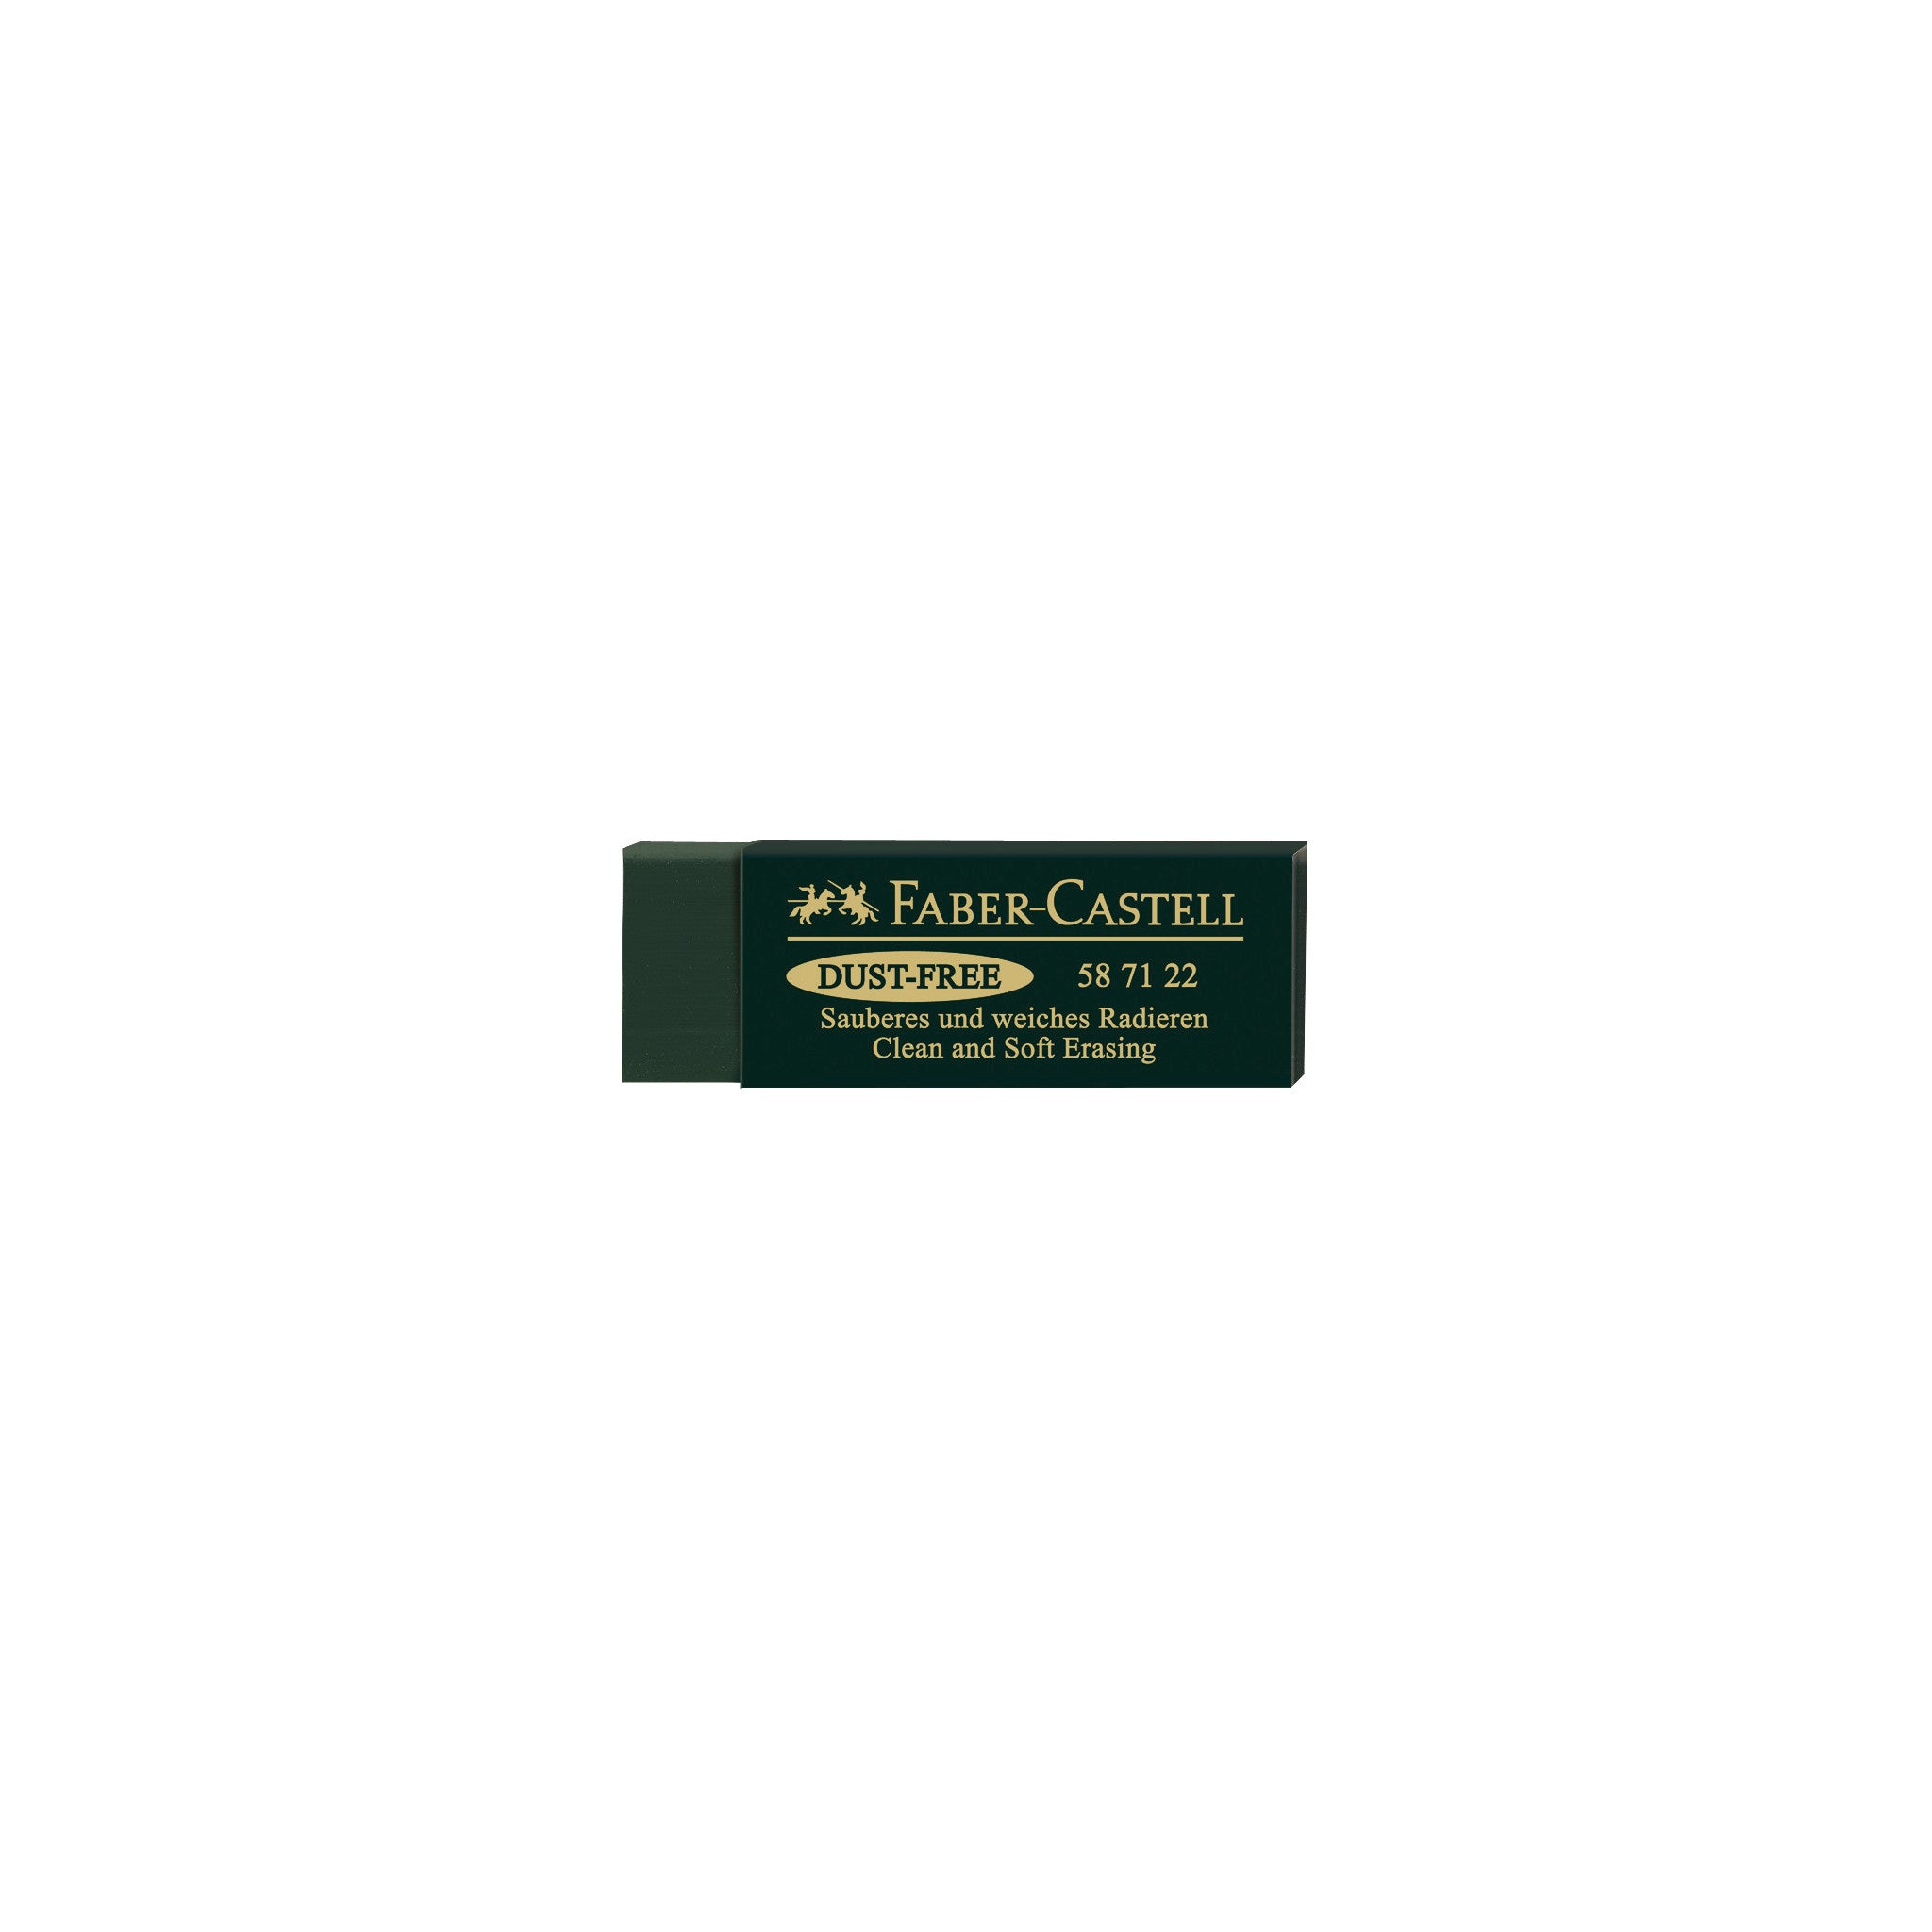 Faber-Castell USA 587122 Dust Free Eraser Green